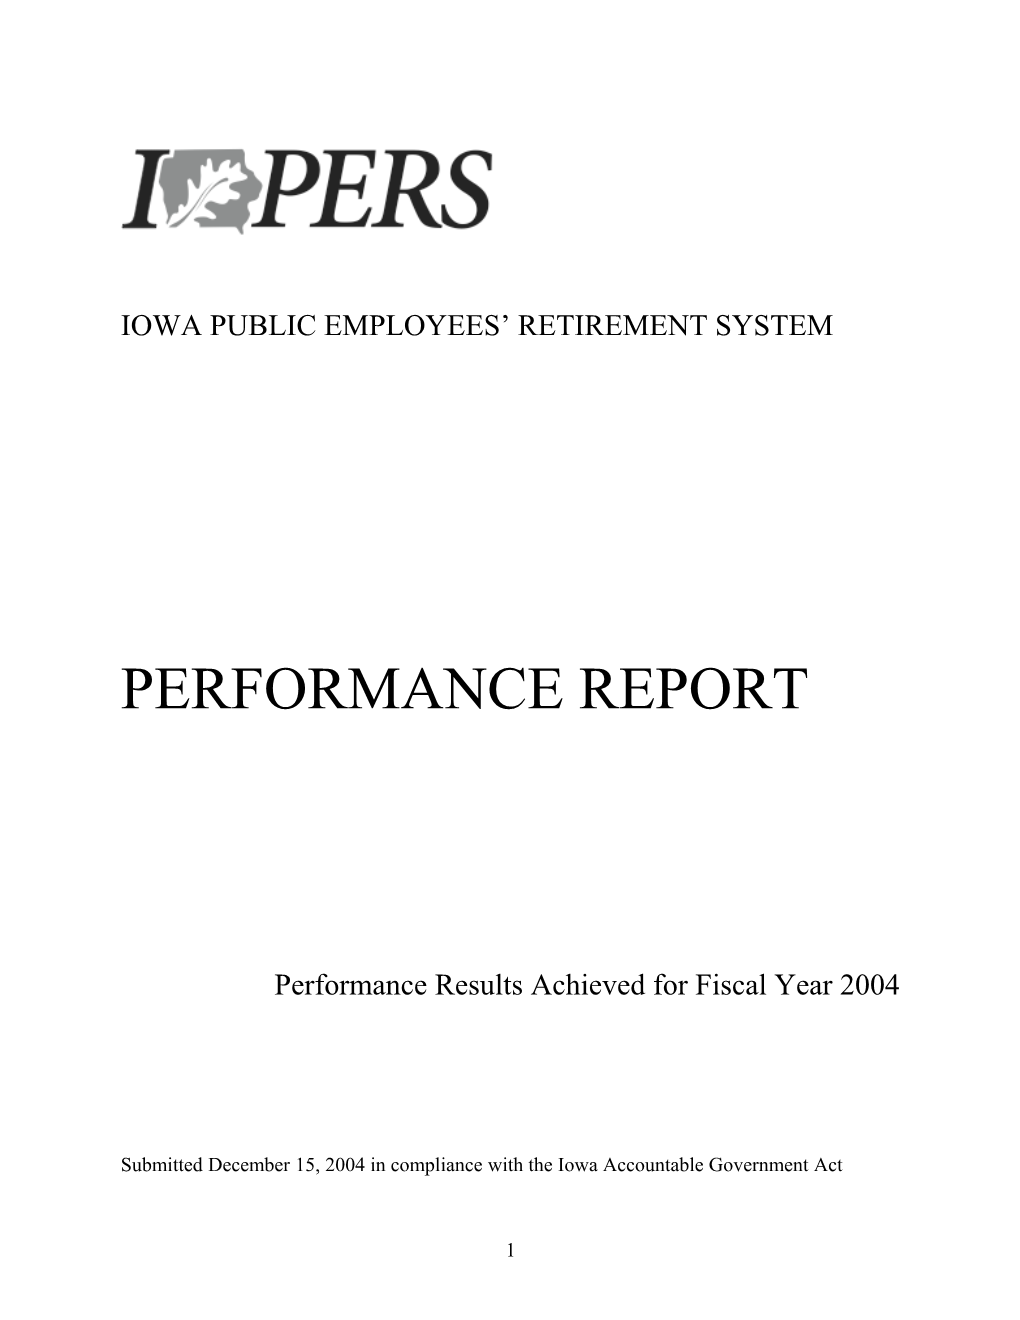 Iowa Public Employees Retirement System